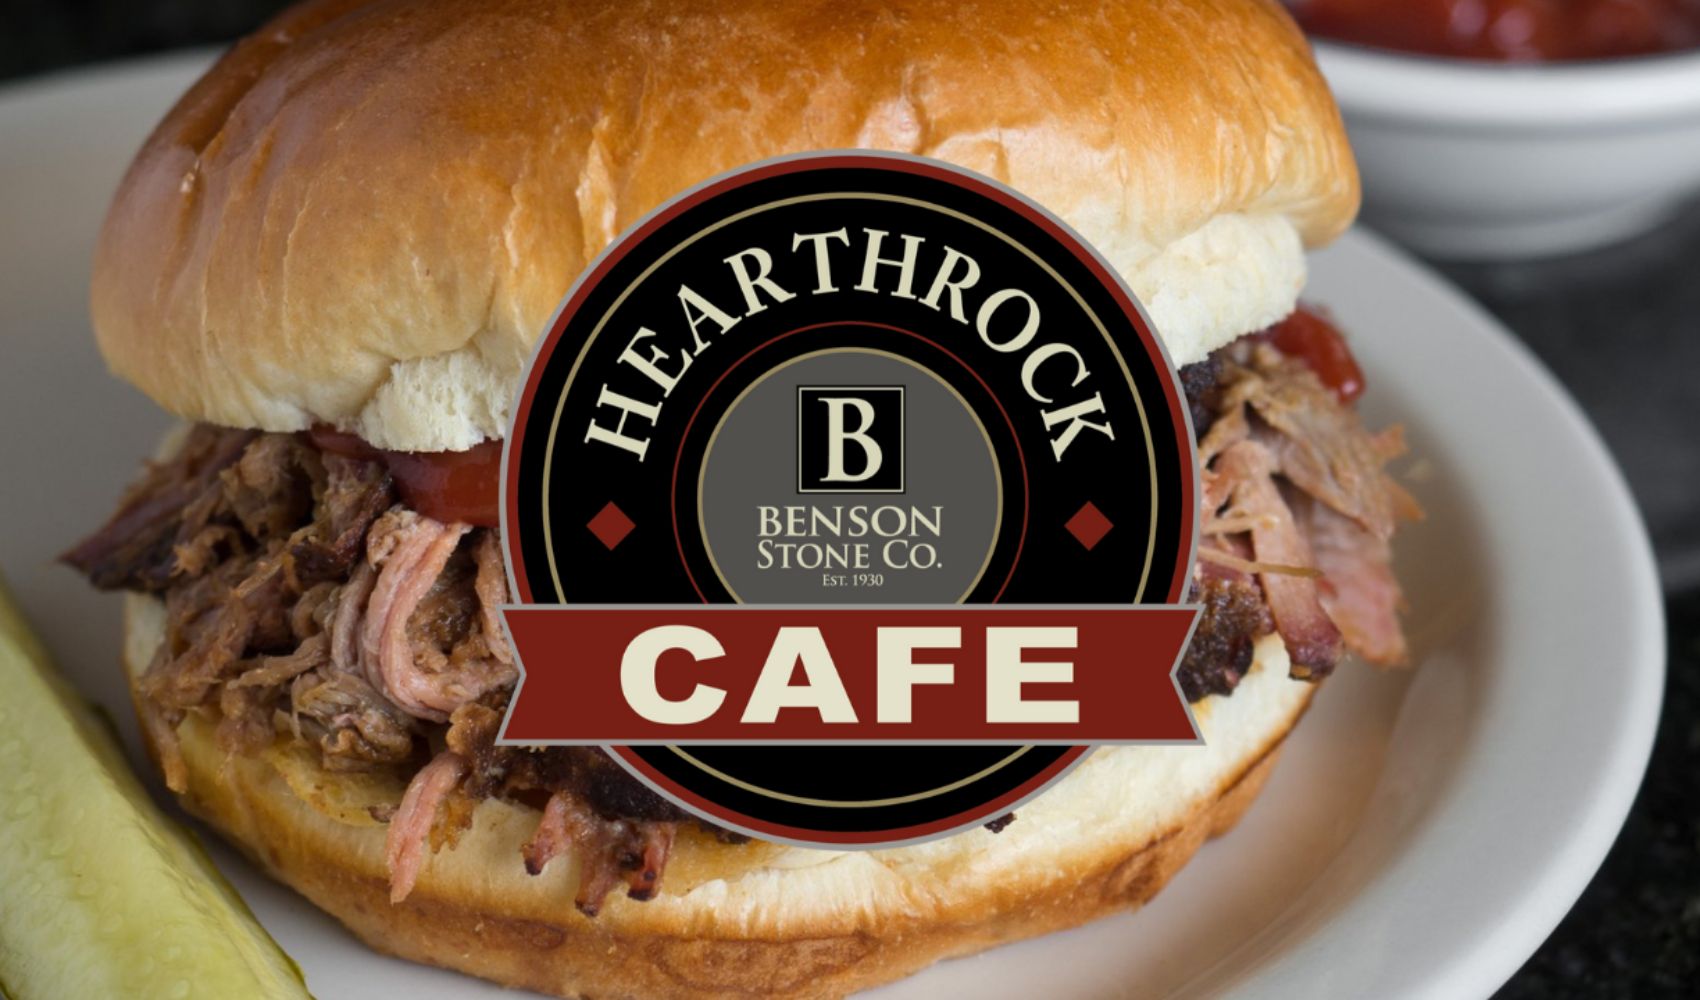 HearthRock Cafe logo with pulled pork sandwich